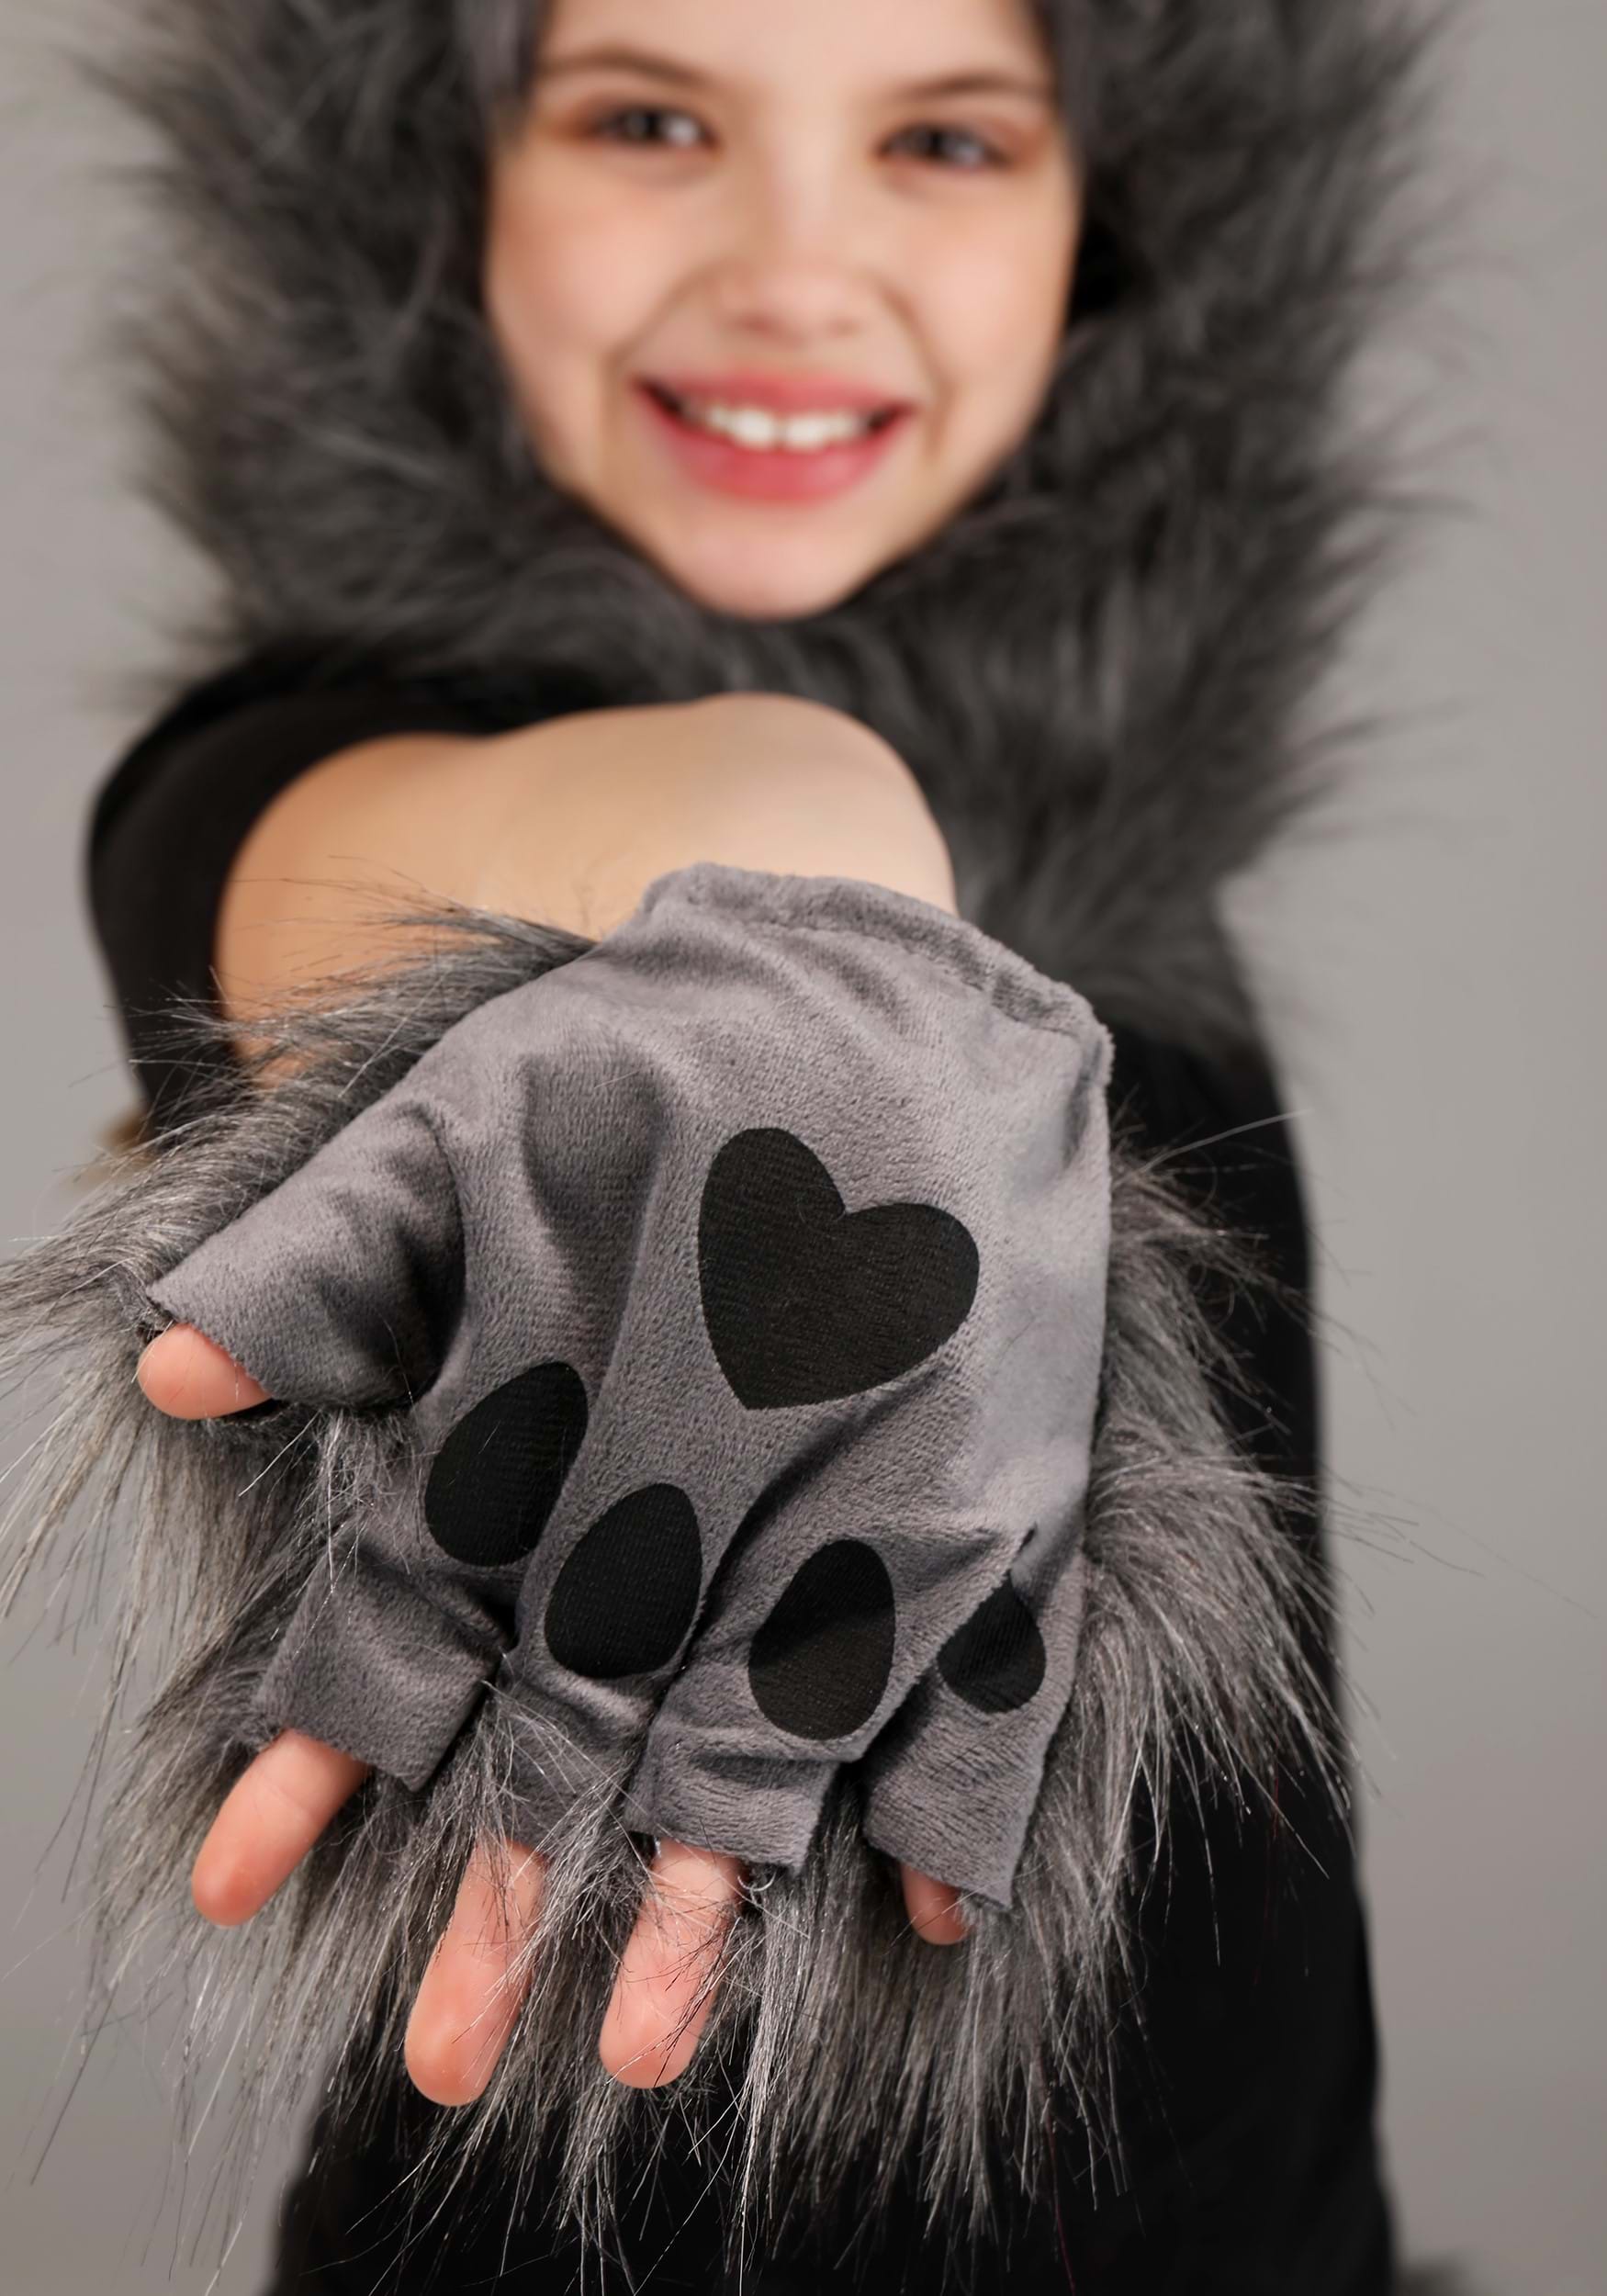 Wolf Hood, Hands & Tail Costume Kit